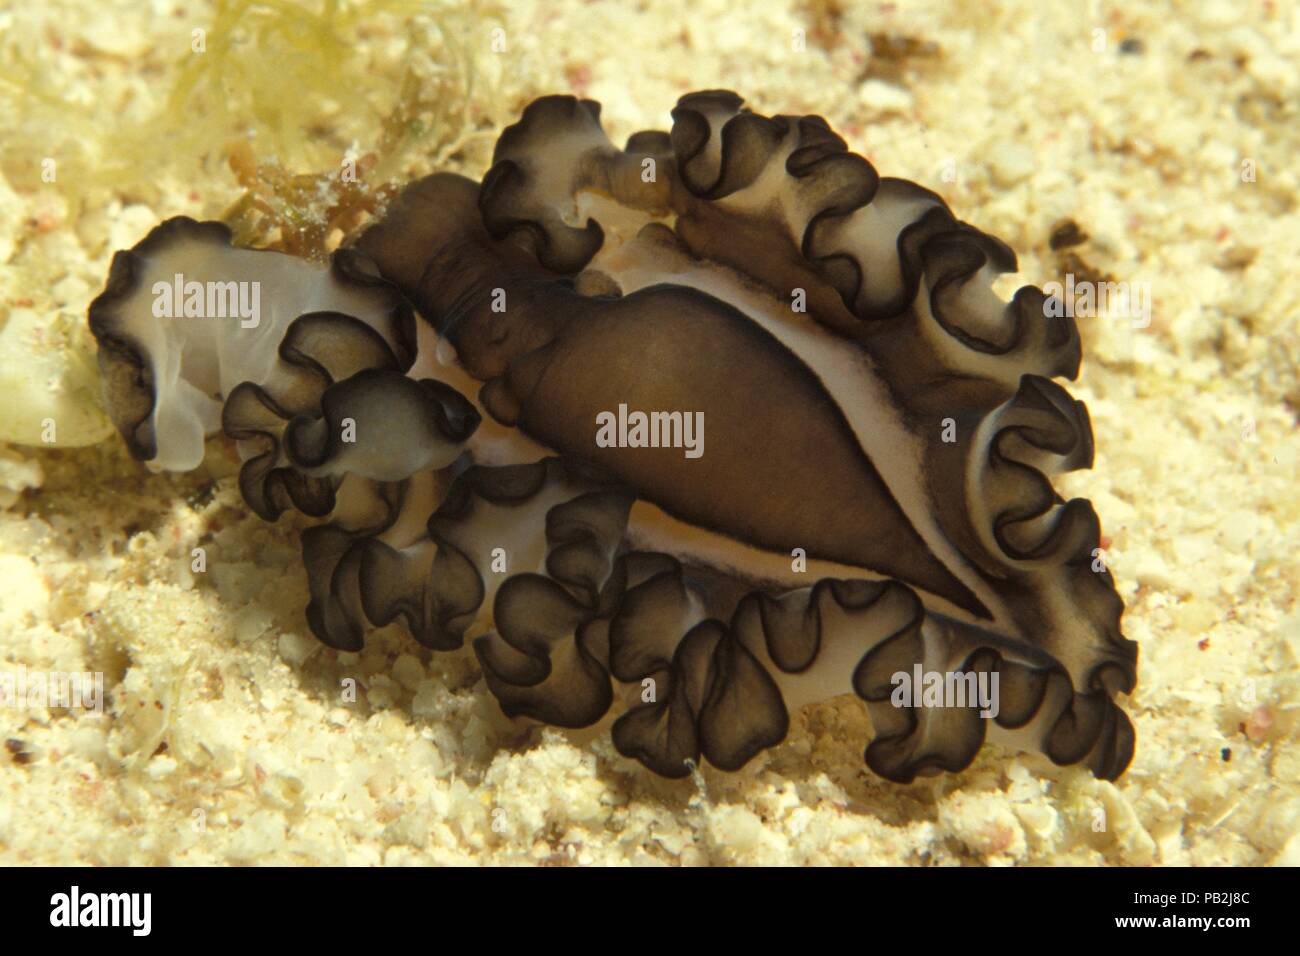 Flatworm marini, Welliger Plattwurm, Pseudobiceros grato, Maldive, Malediven Foto Stock